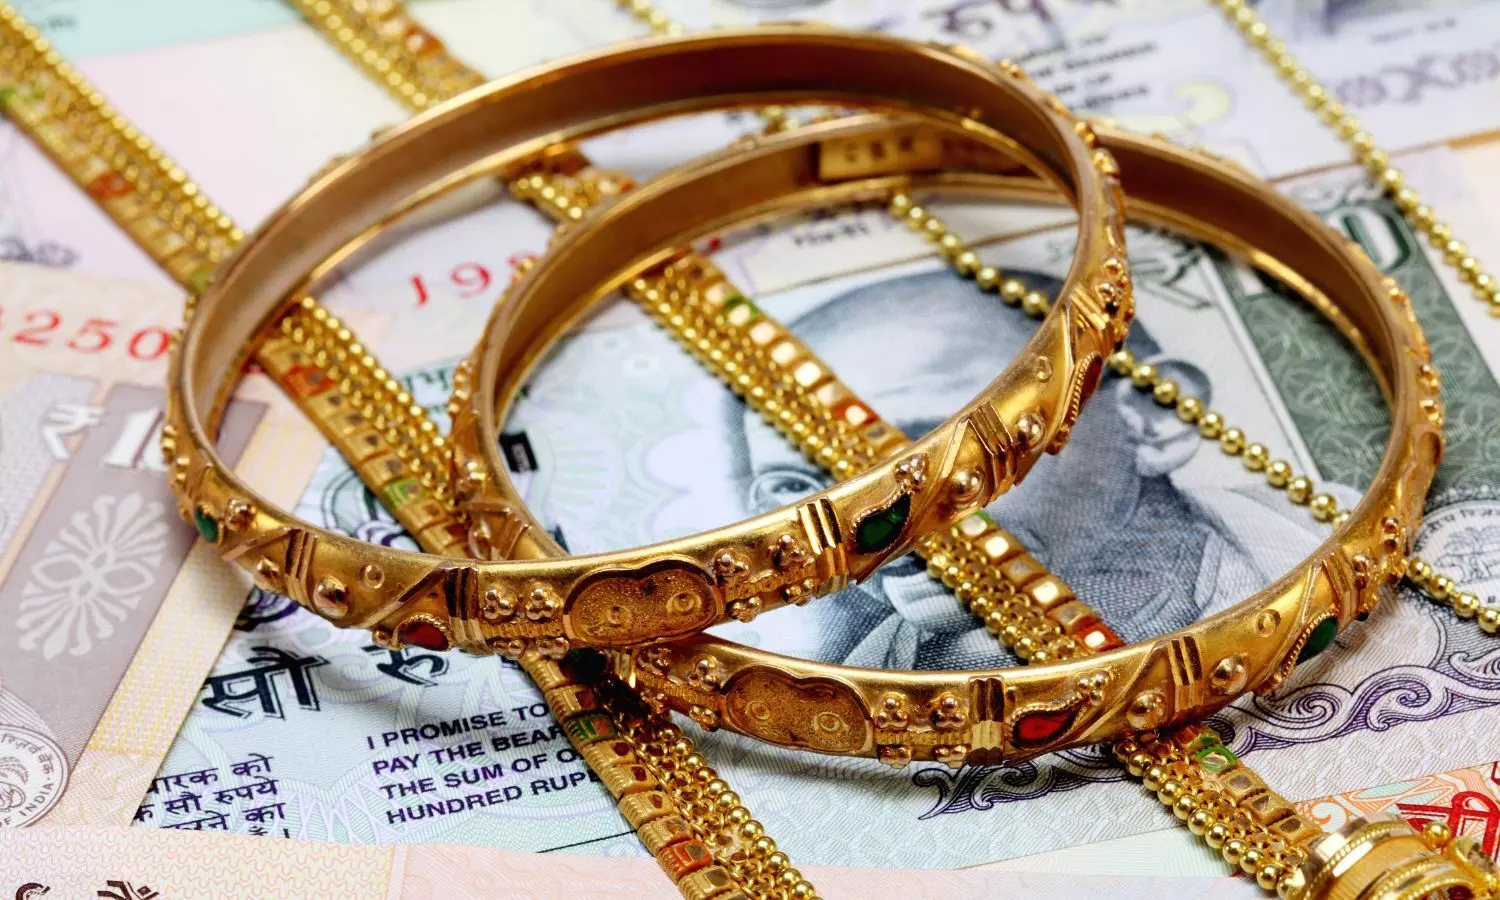 Gold Bangles and Rupee notes